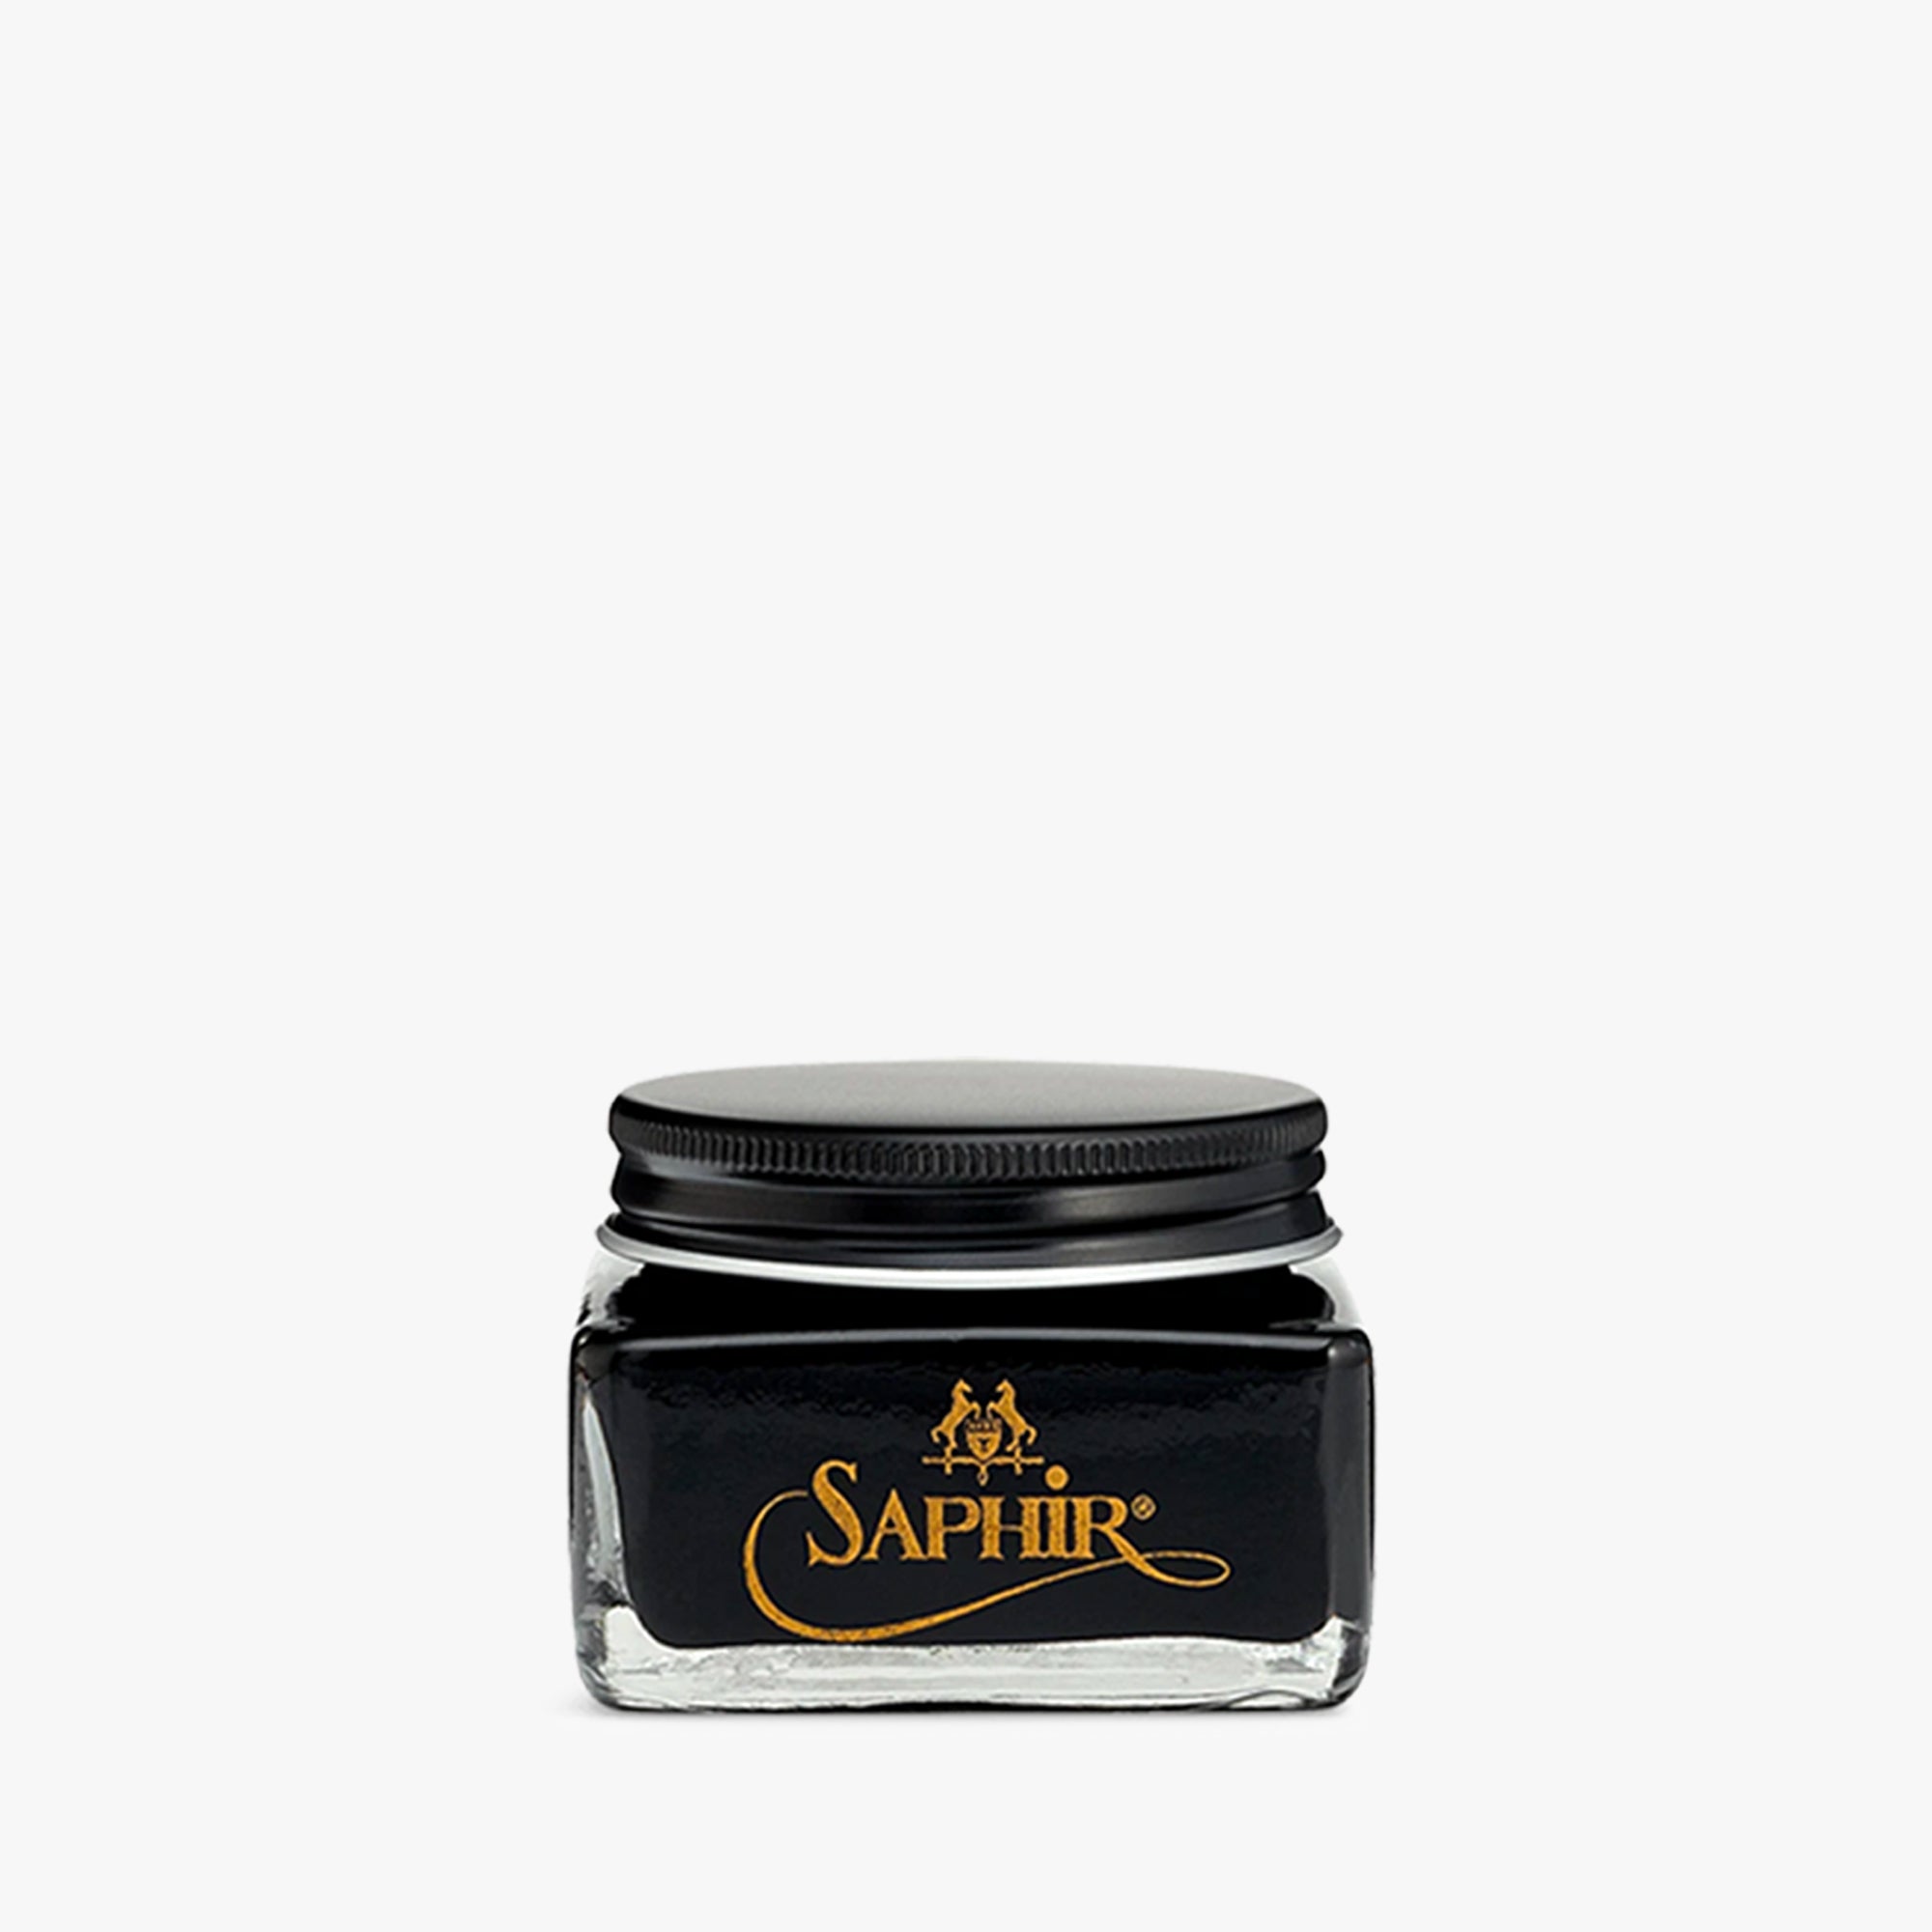 Saphir Creme 1925 - Black